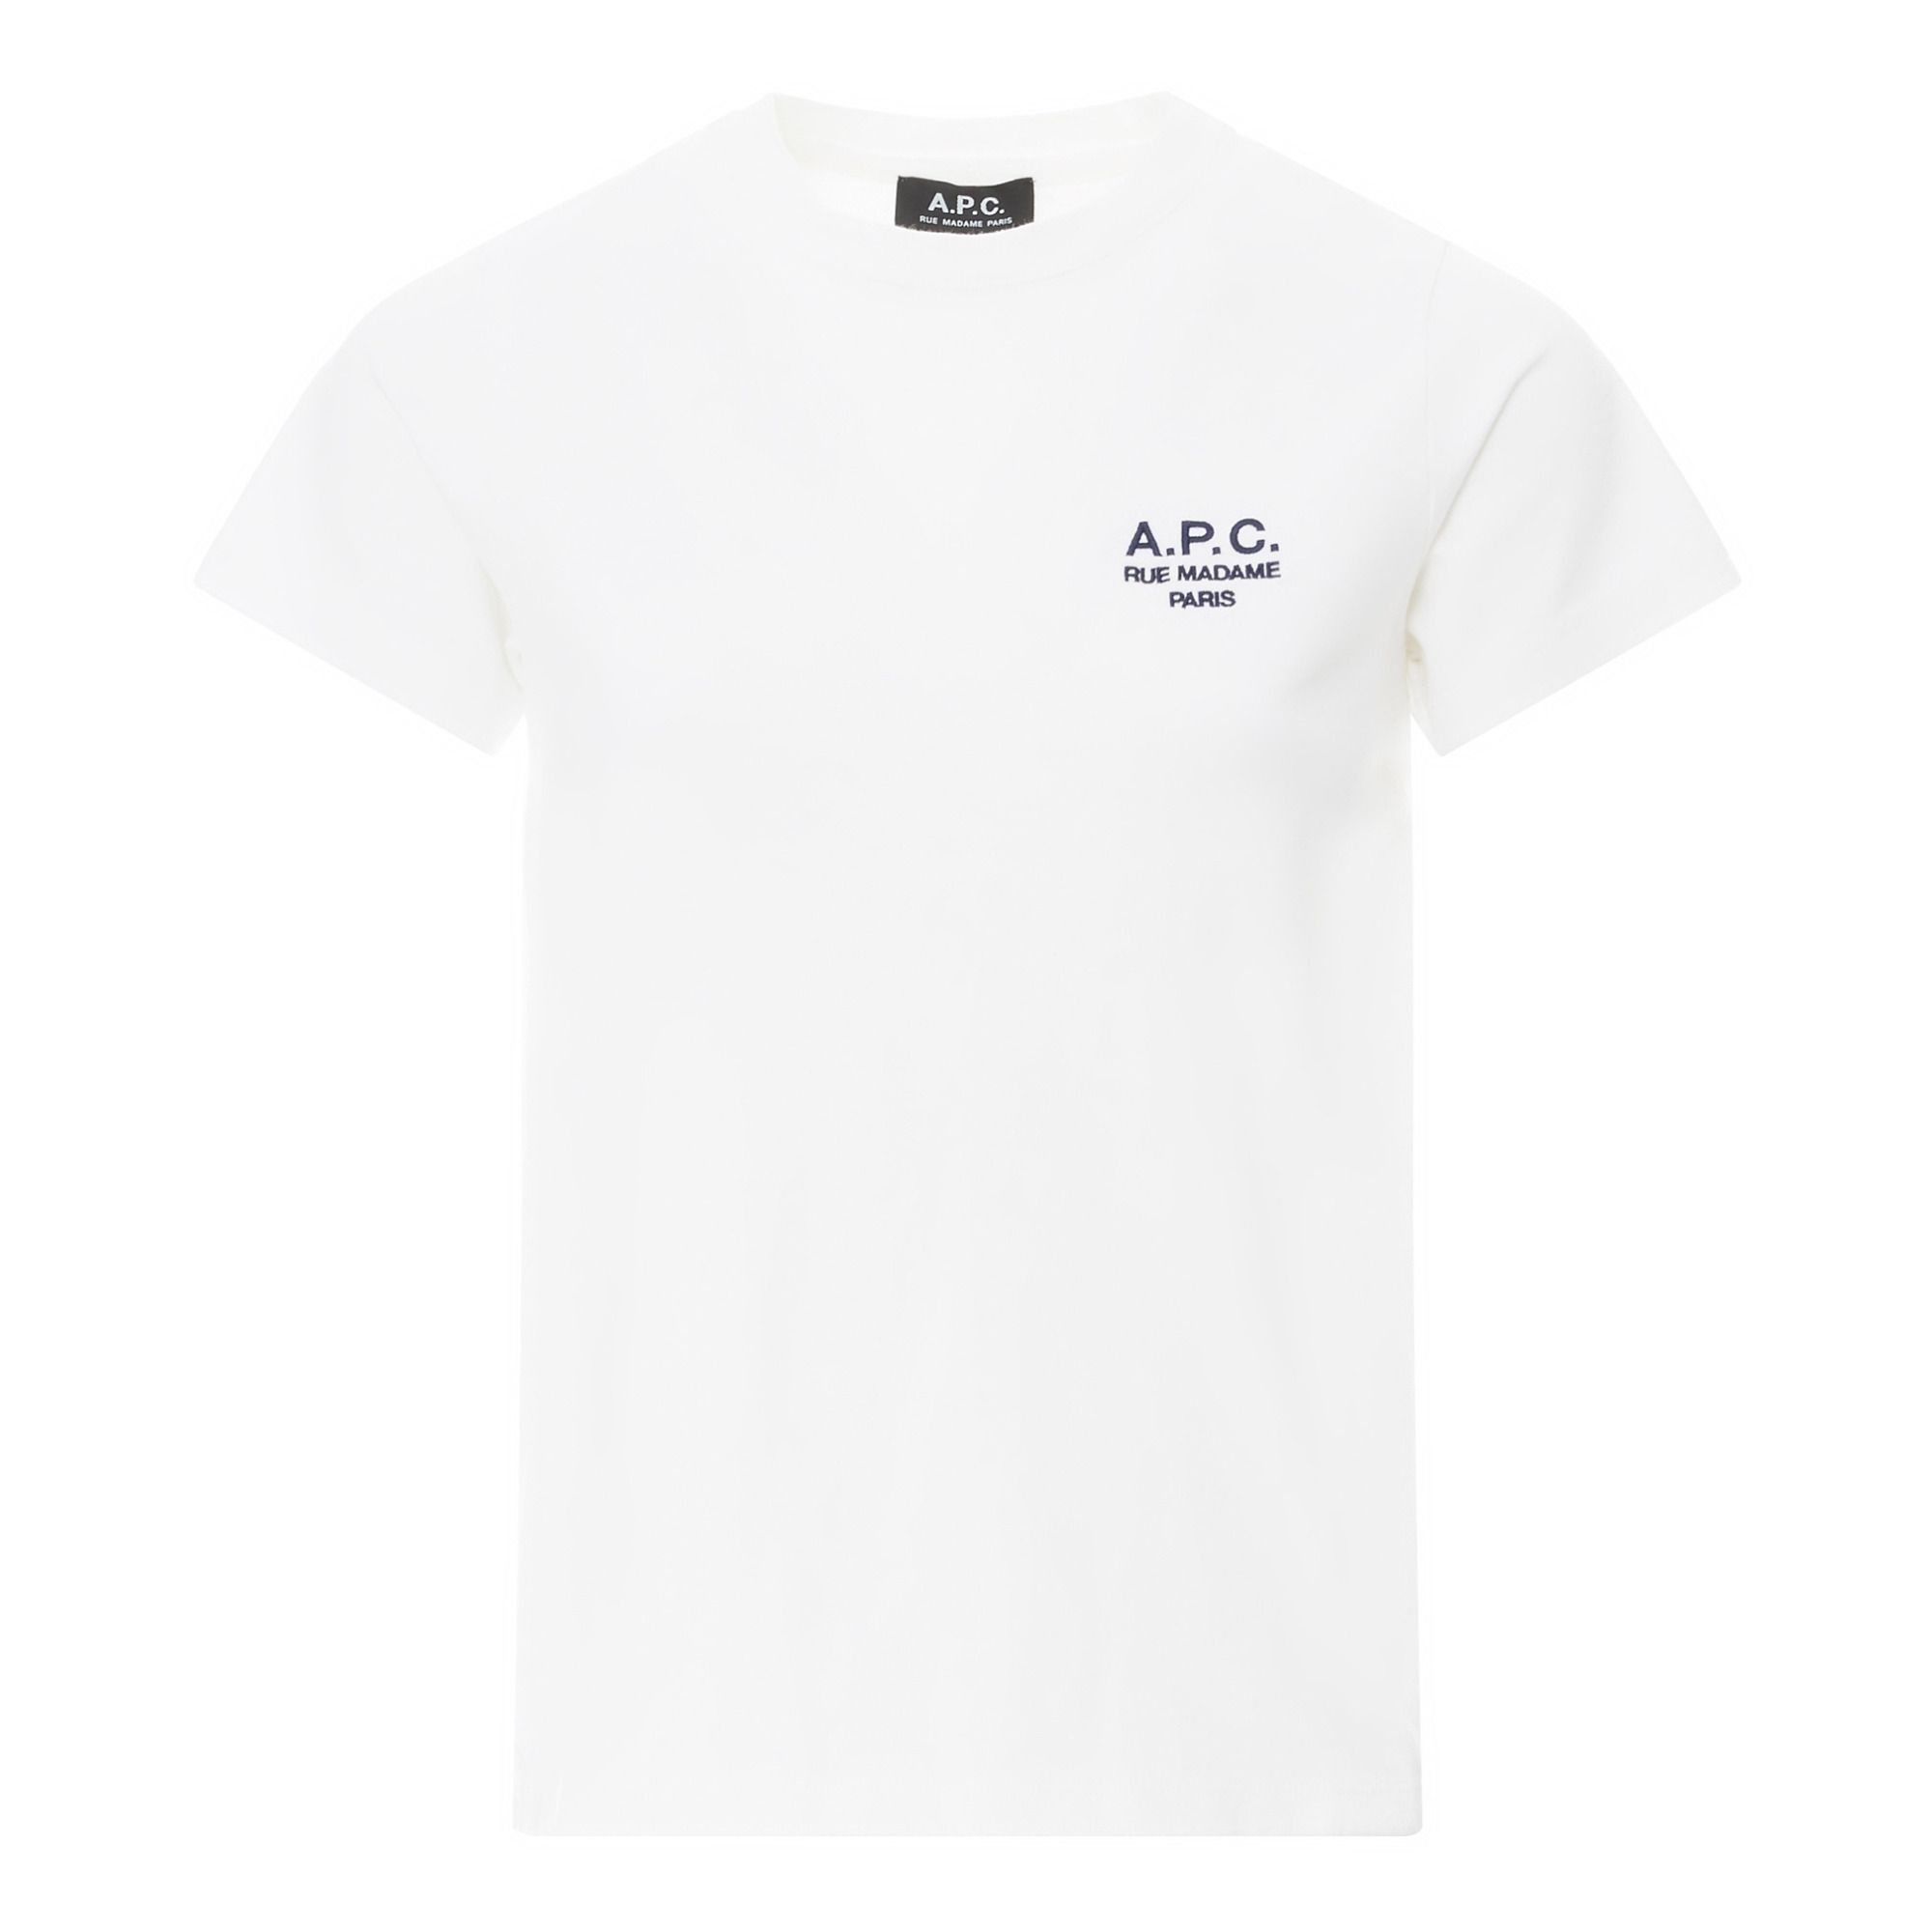 A.P.C. - T-shirt Denise - Femme - Blanc